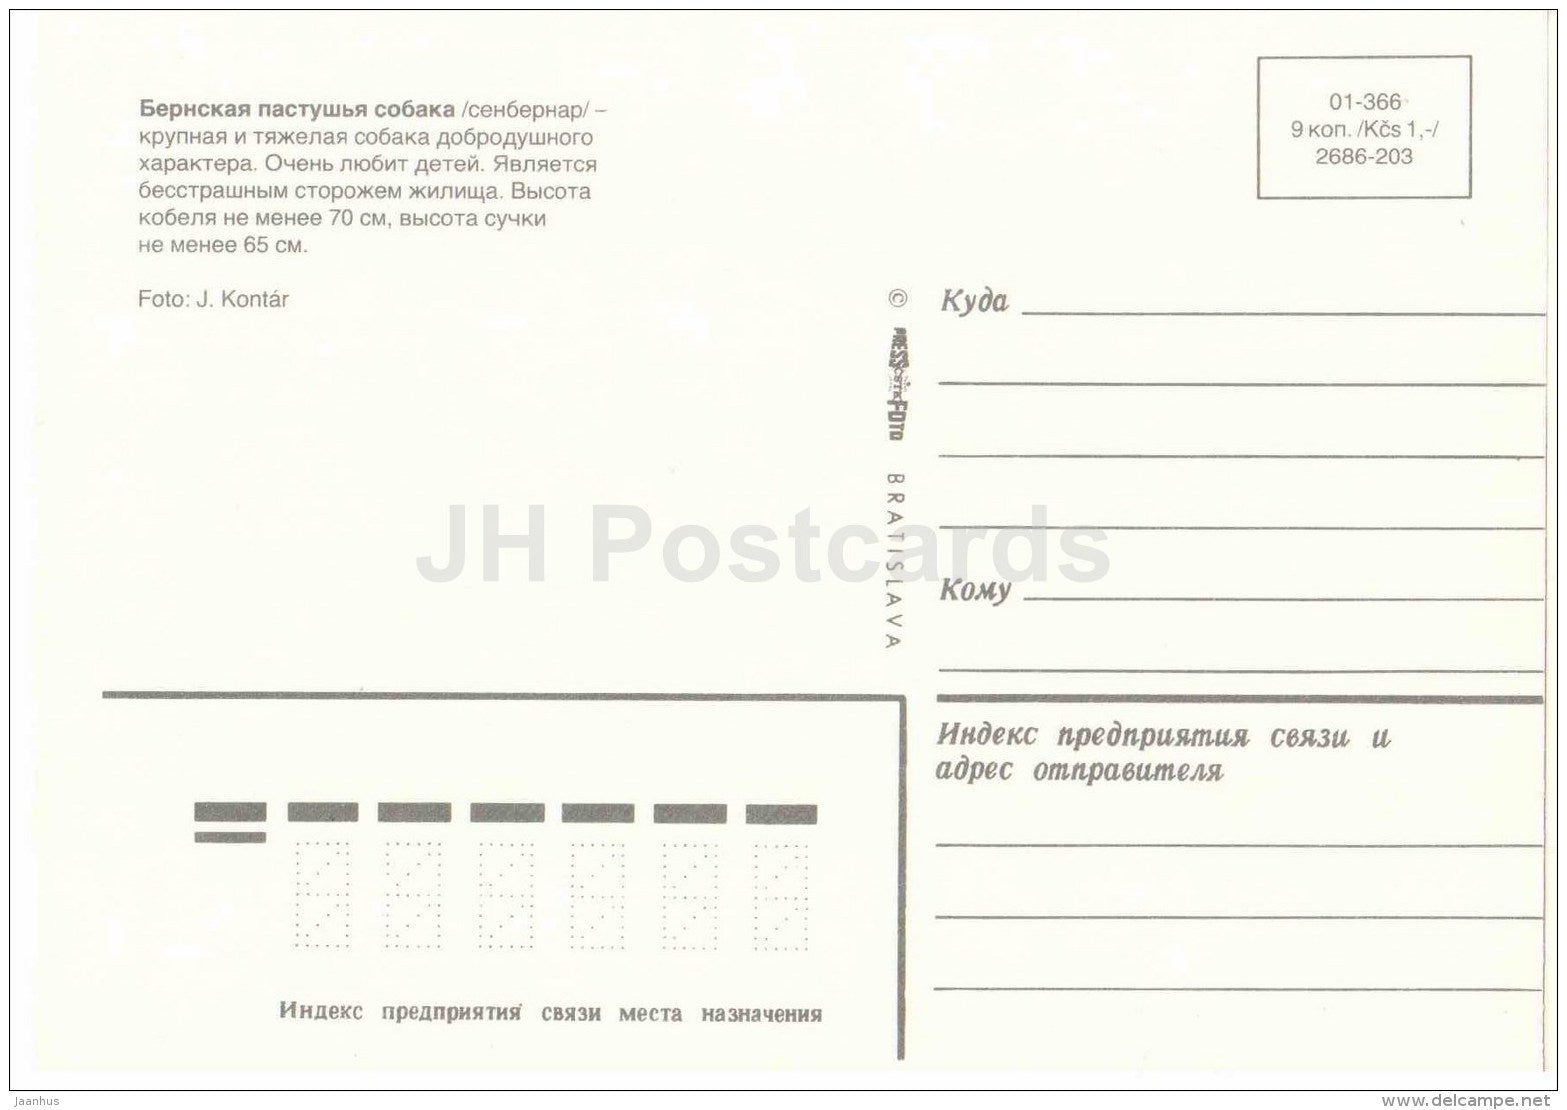 Bernese Mountain Dog - dog - Russia USSR - unused - JH Postcards